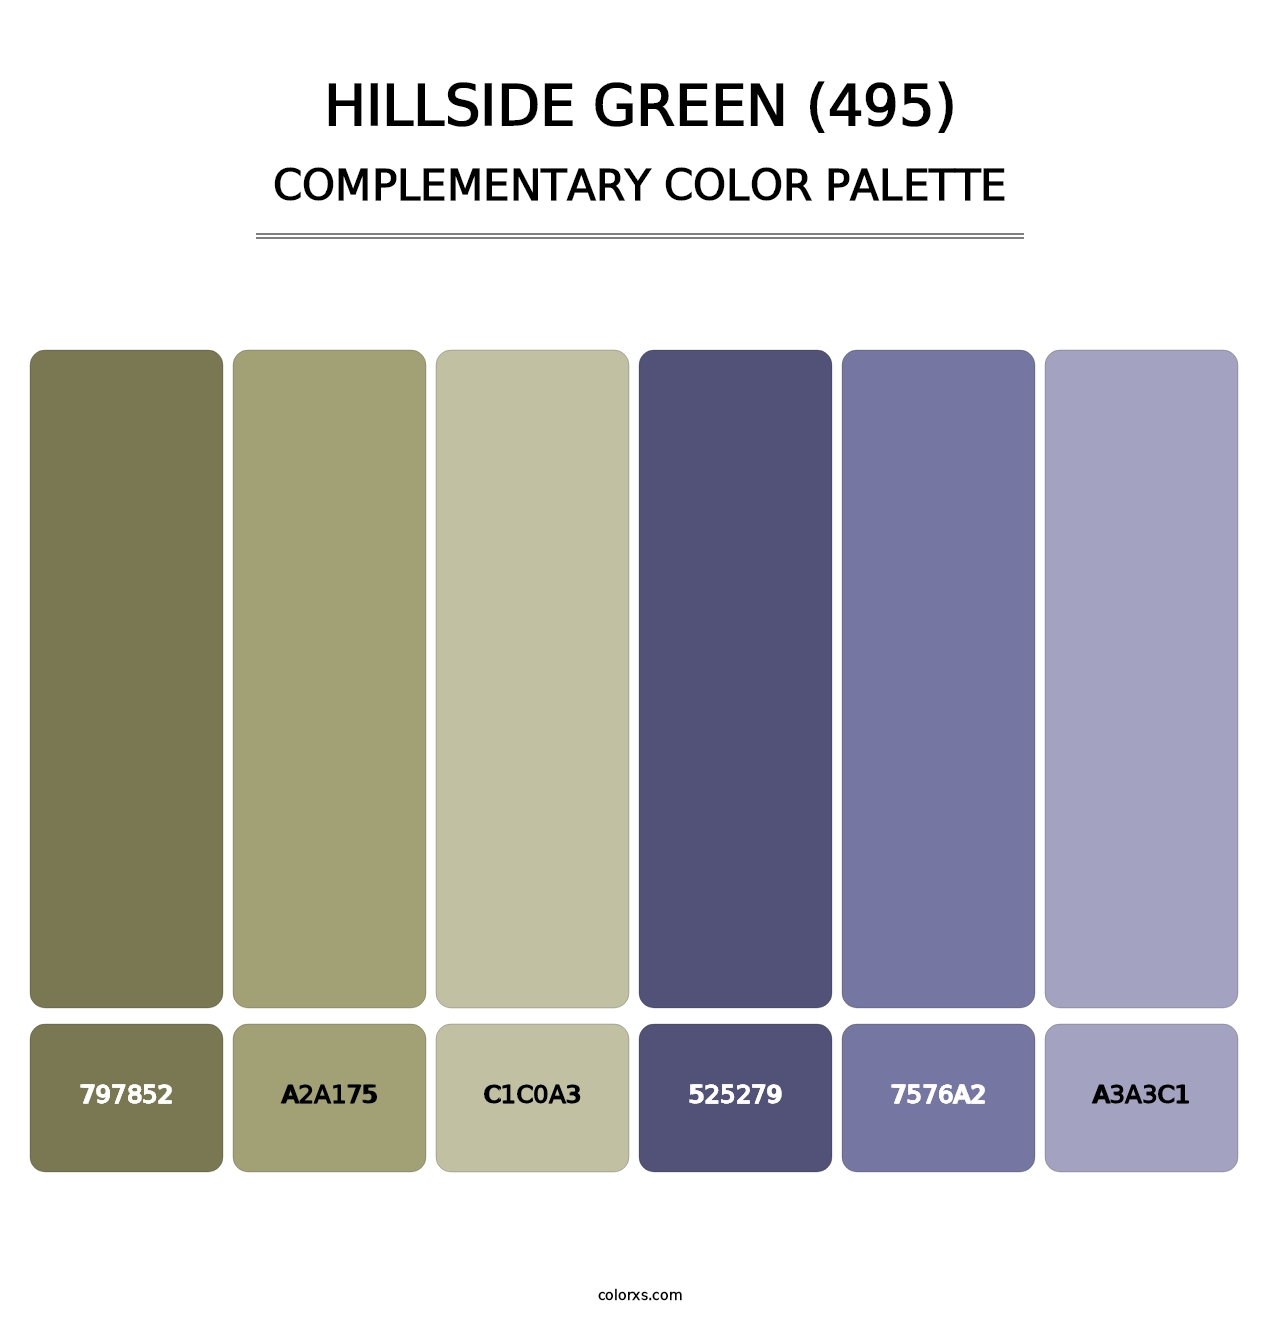 Hillside Green (495) - Complementary Color Palette